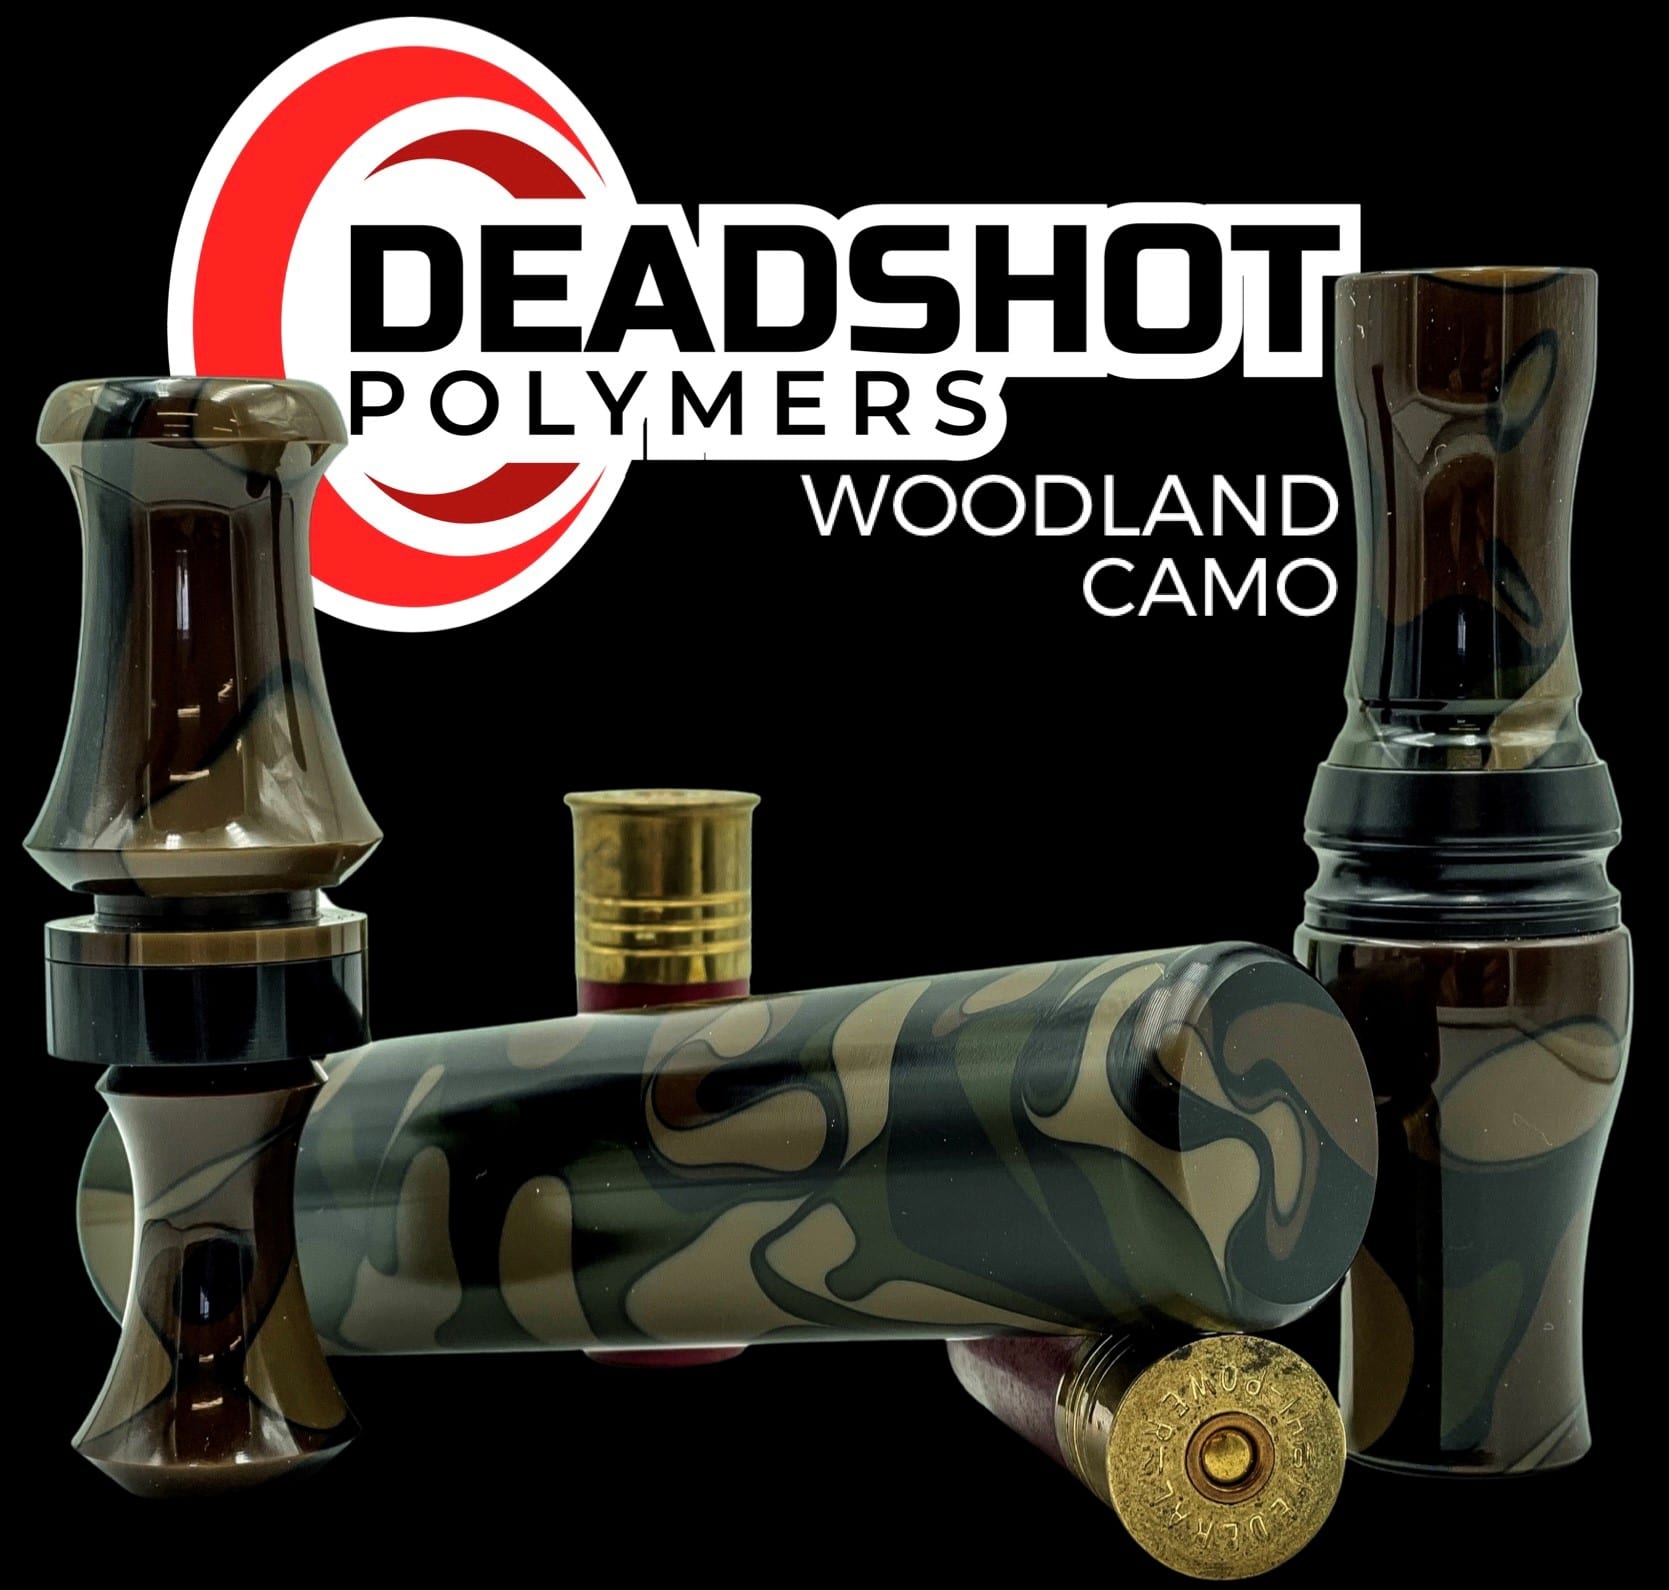 Deadshot Woodland Camo - Specialty Cast Acrylic Rod